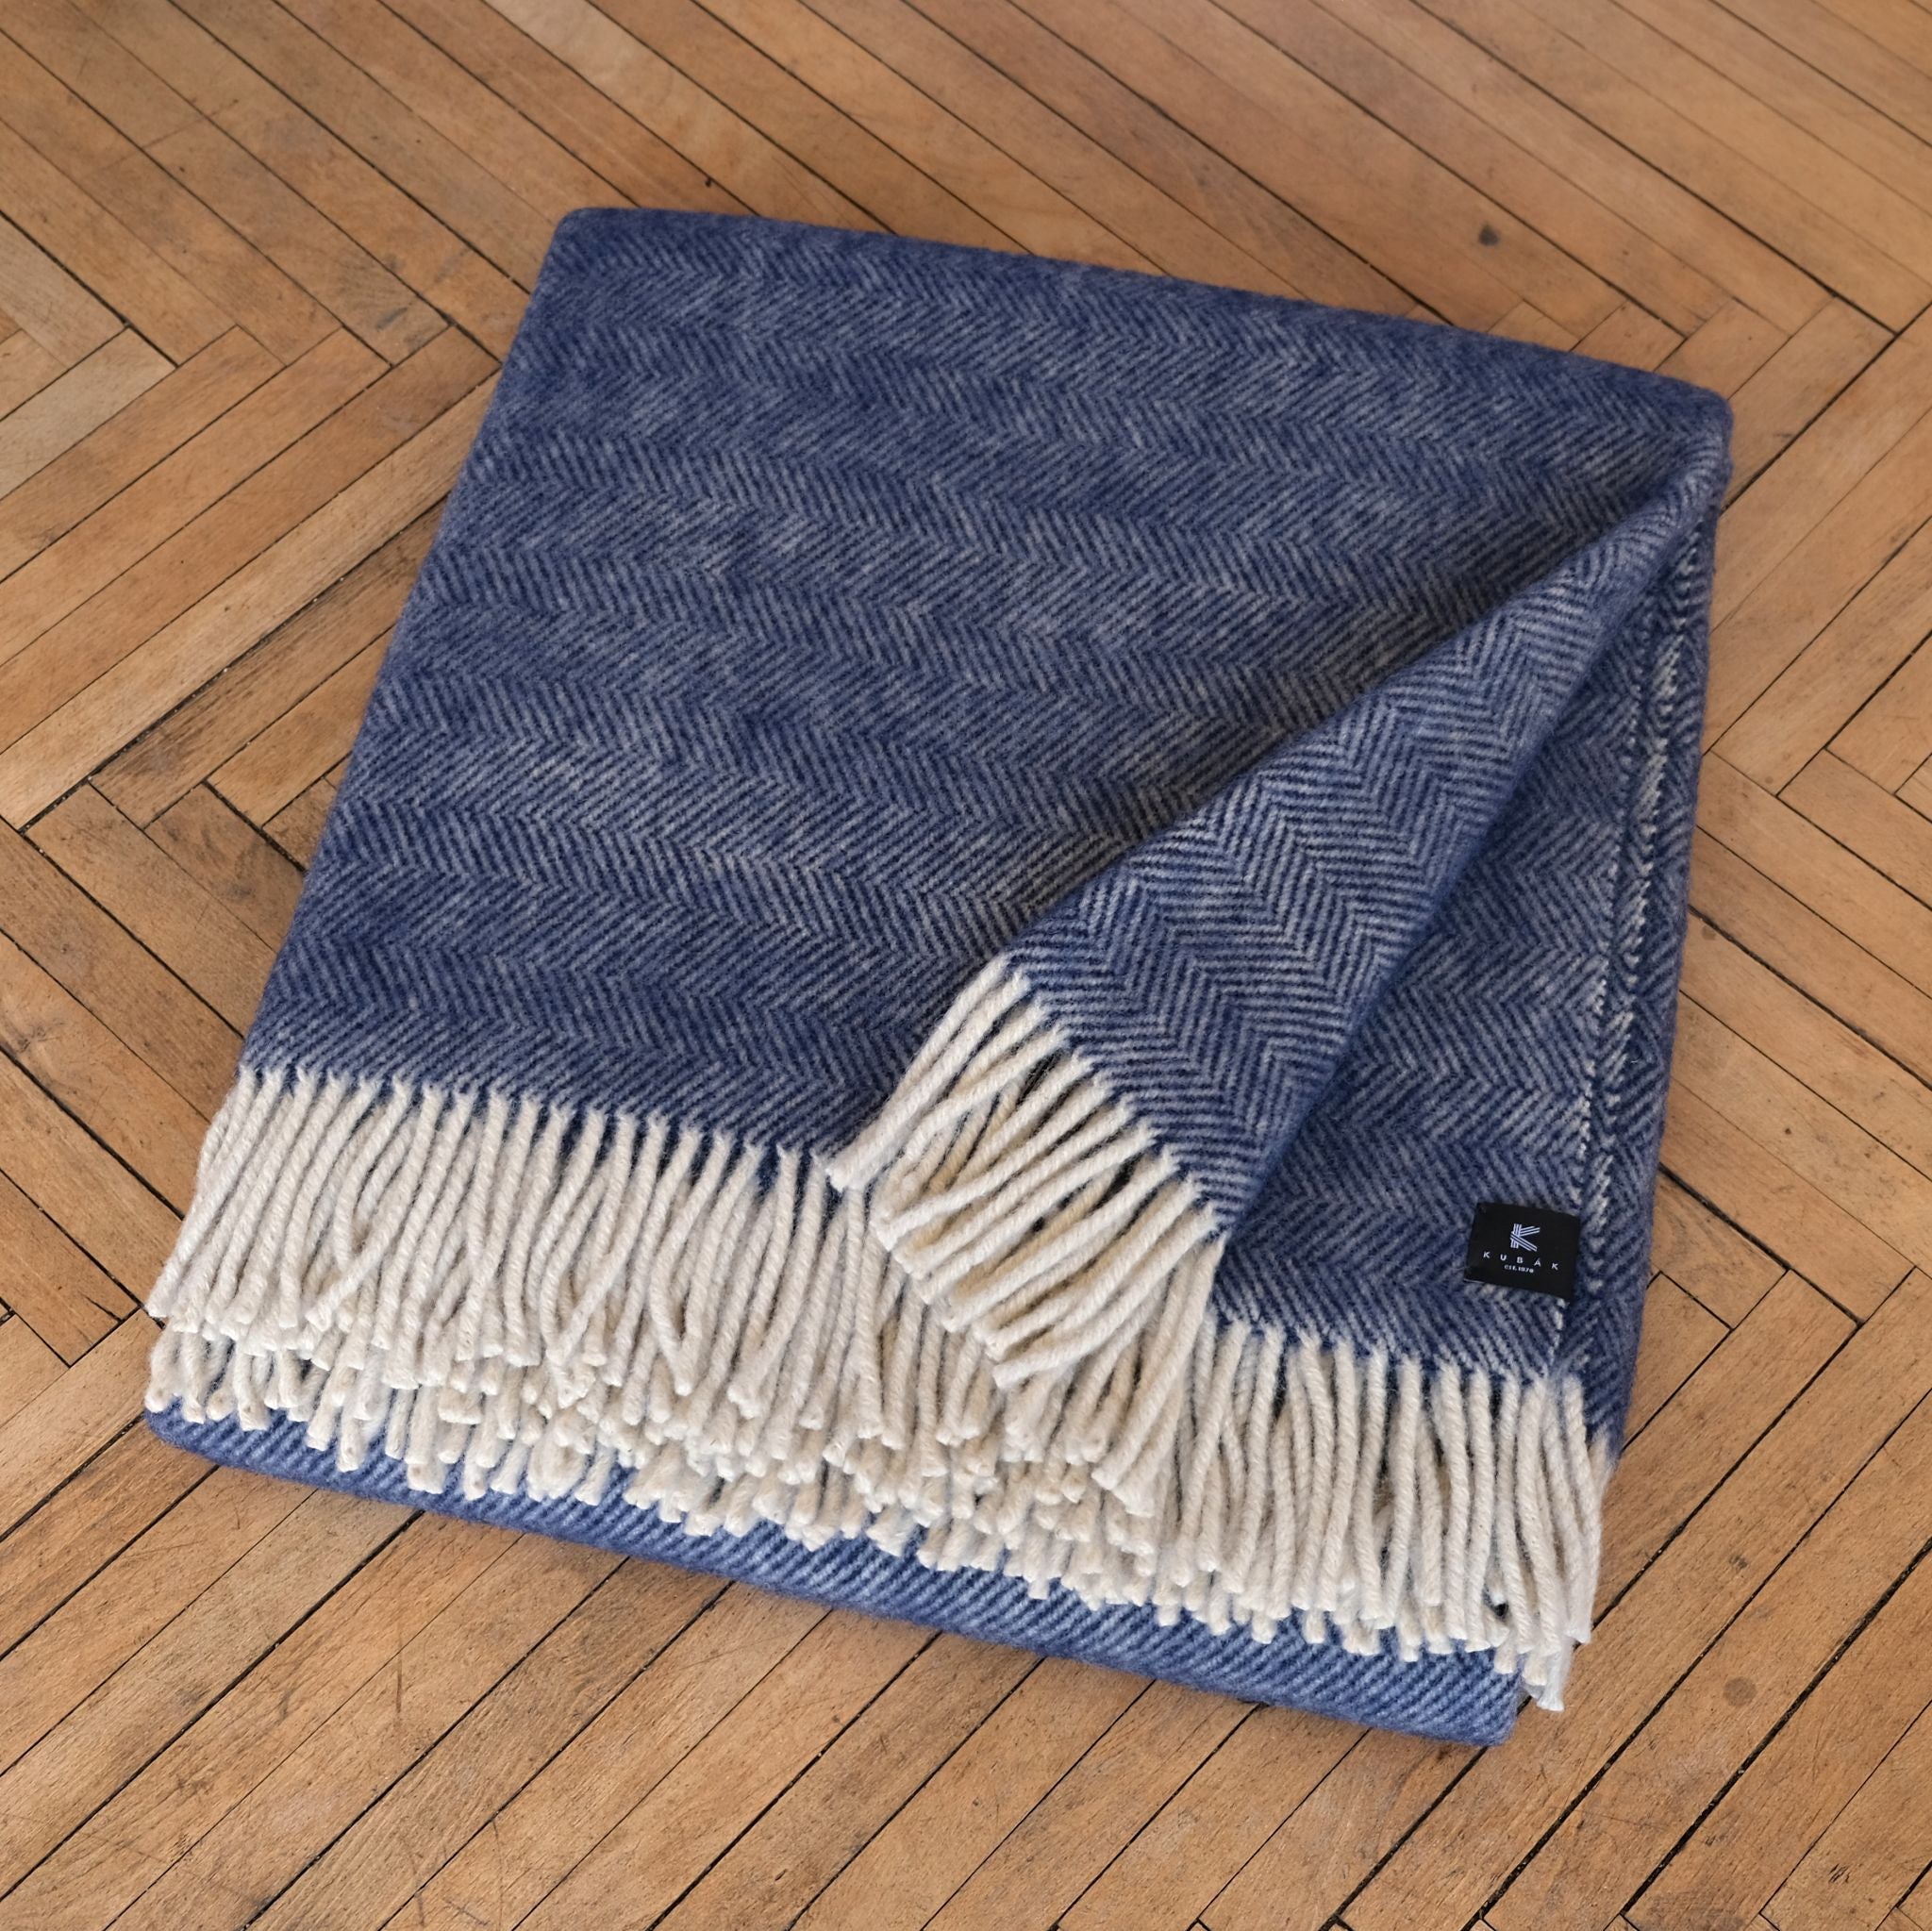 Sheep wool blanket - indigo